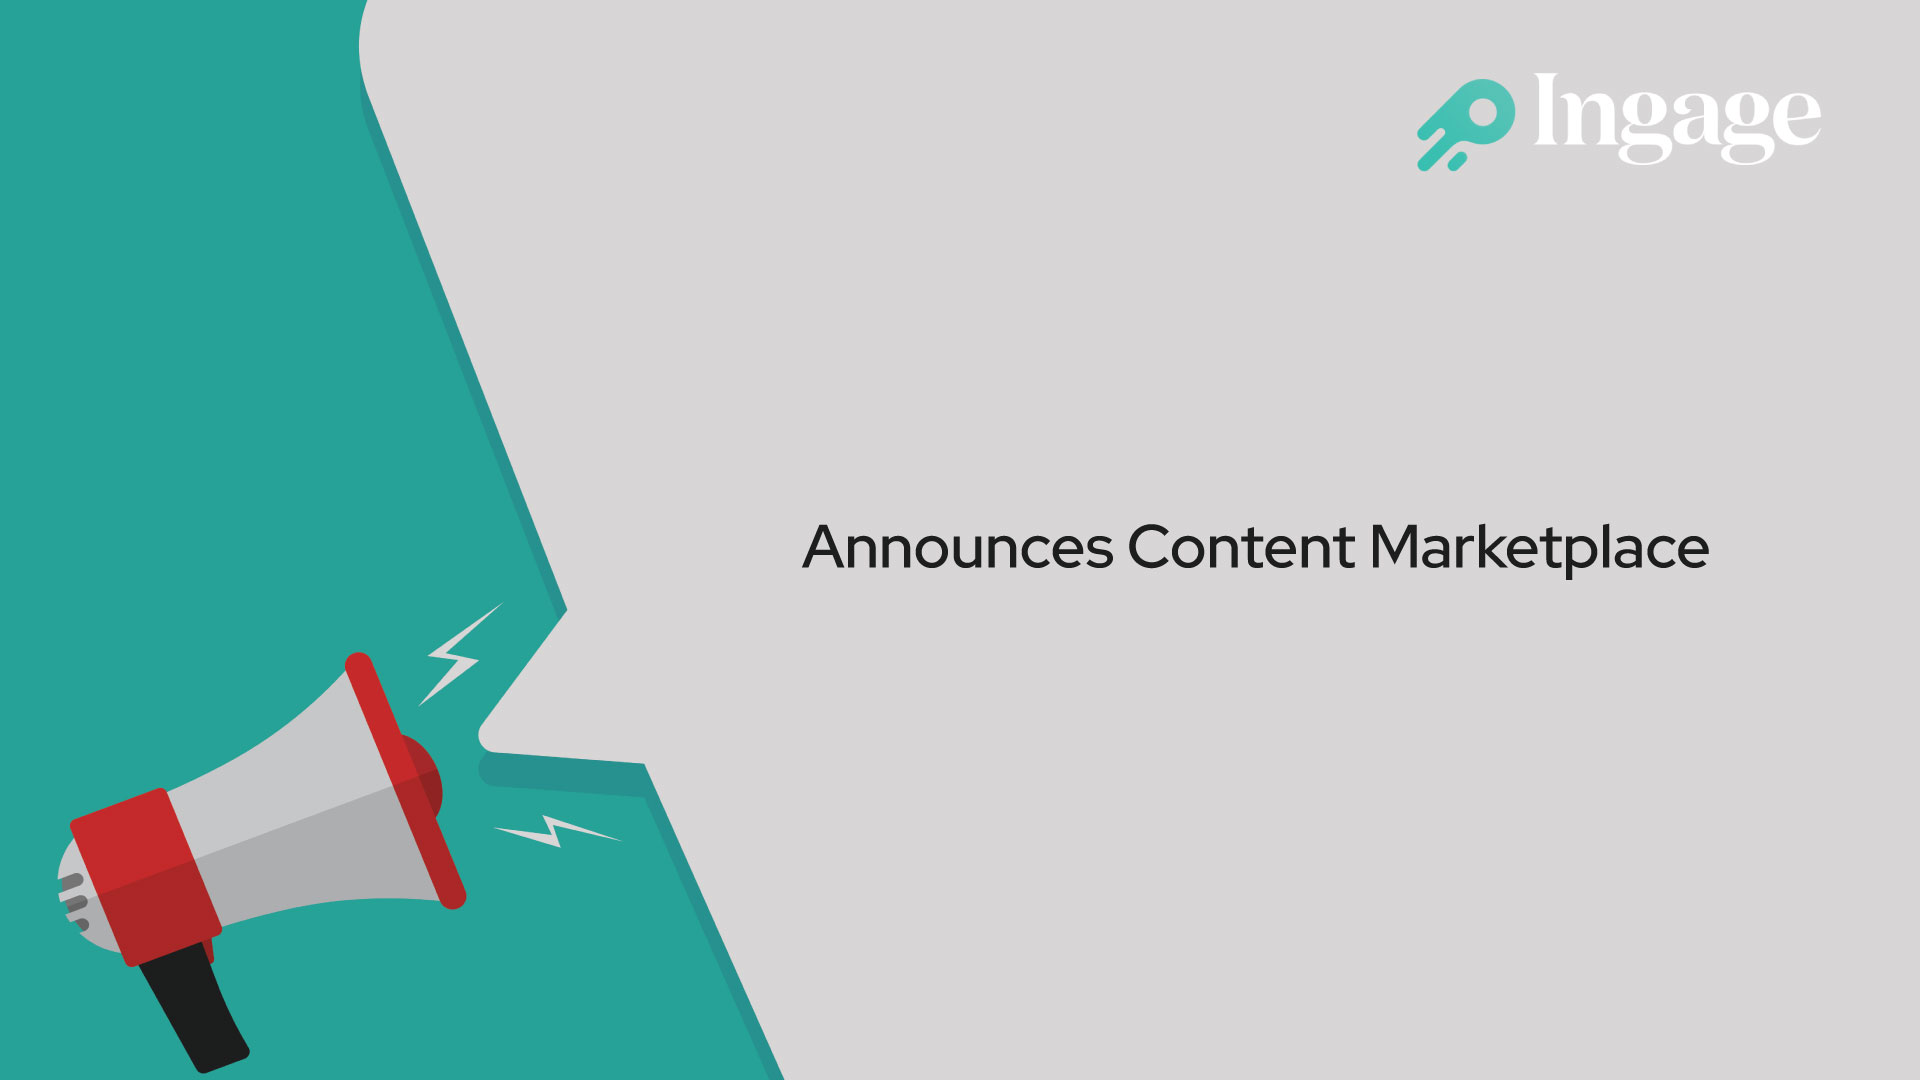 Ingage Announces Content Marketplace